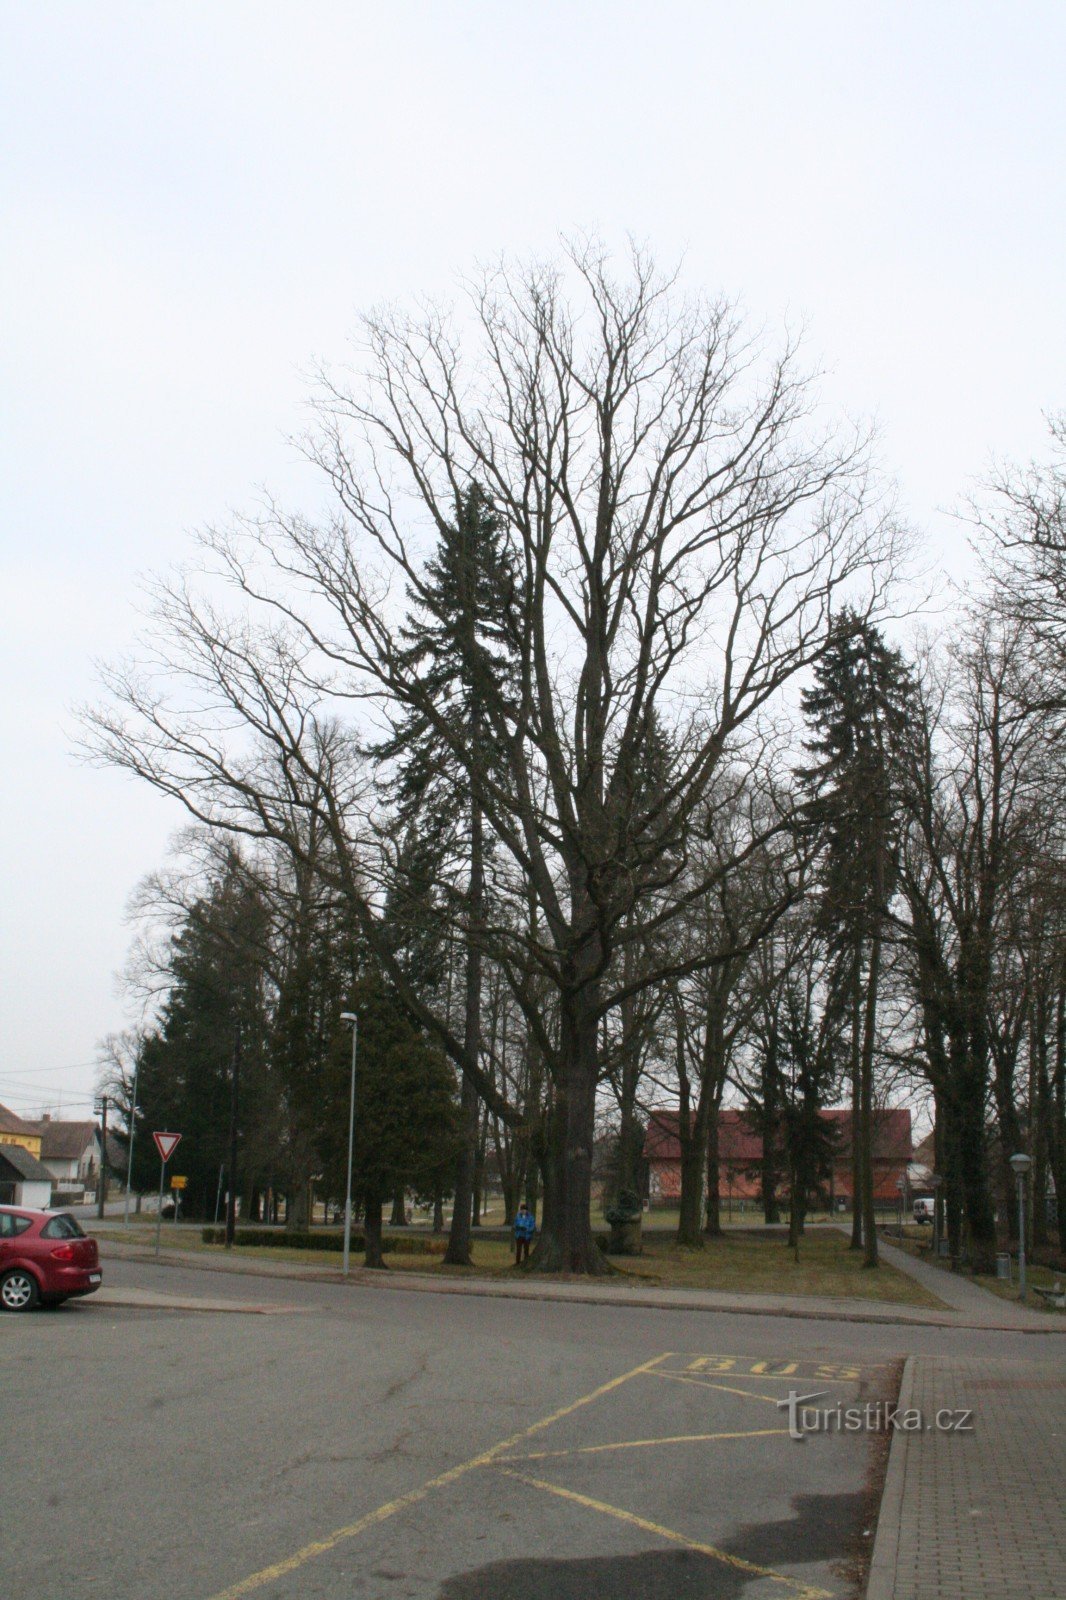 Stejarul lui Žižk din Bělč